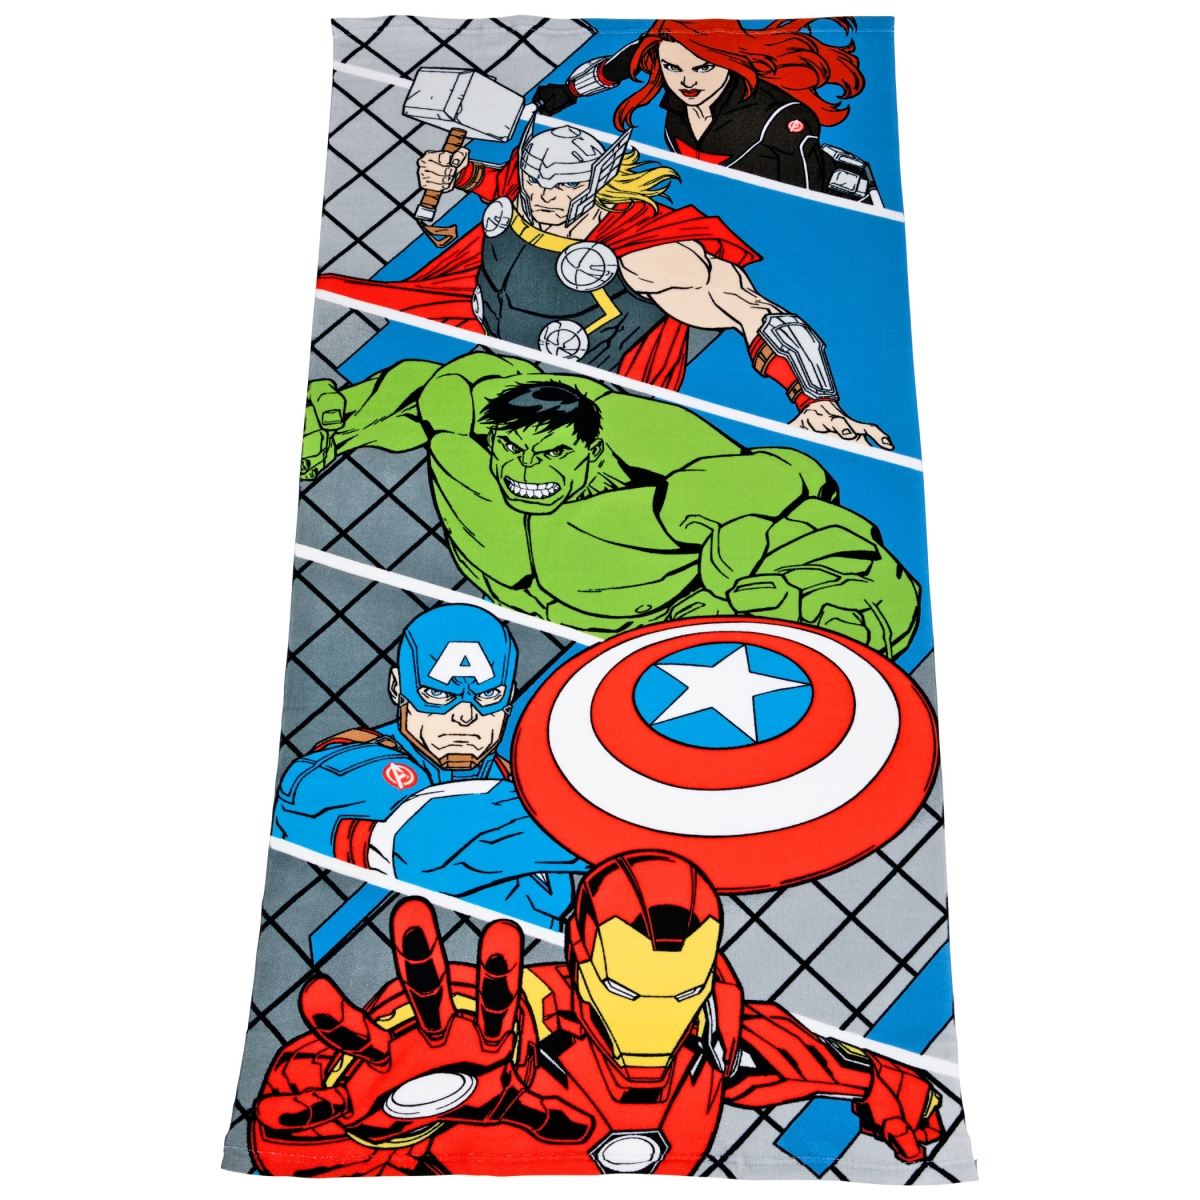 Marvel Heroes & Avengers 845672 27 x 54 in. Marvel Comics the Avengers Microfiber Beach Towel